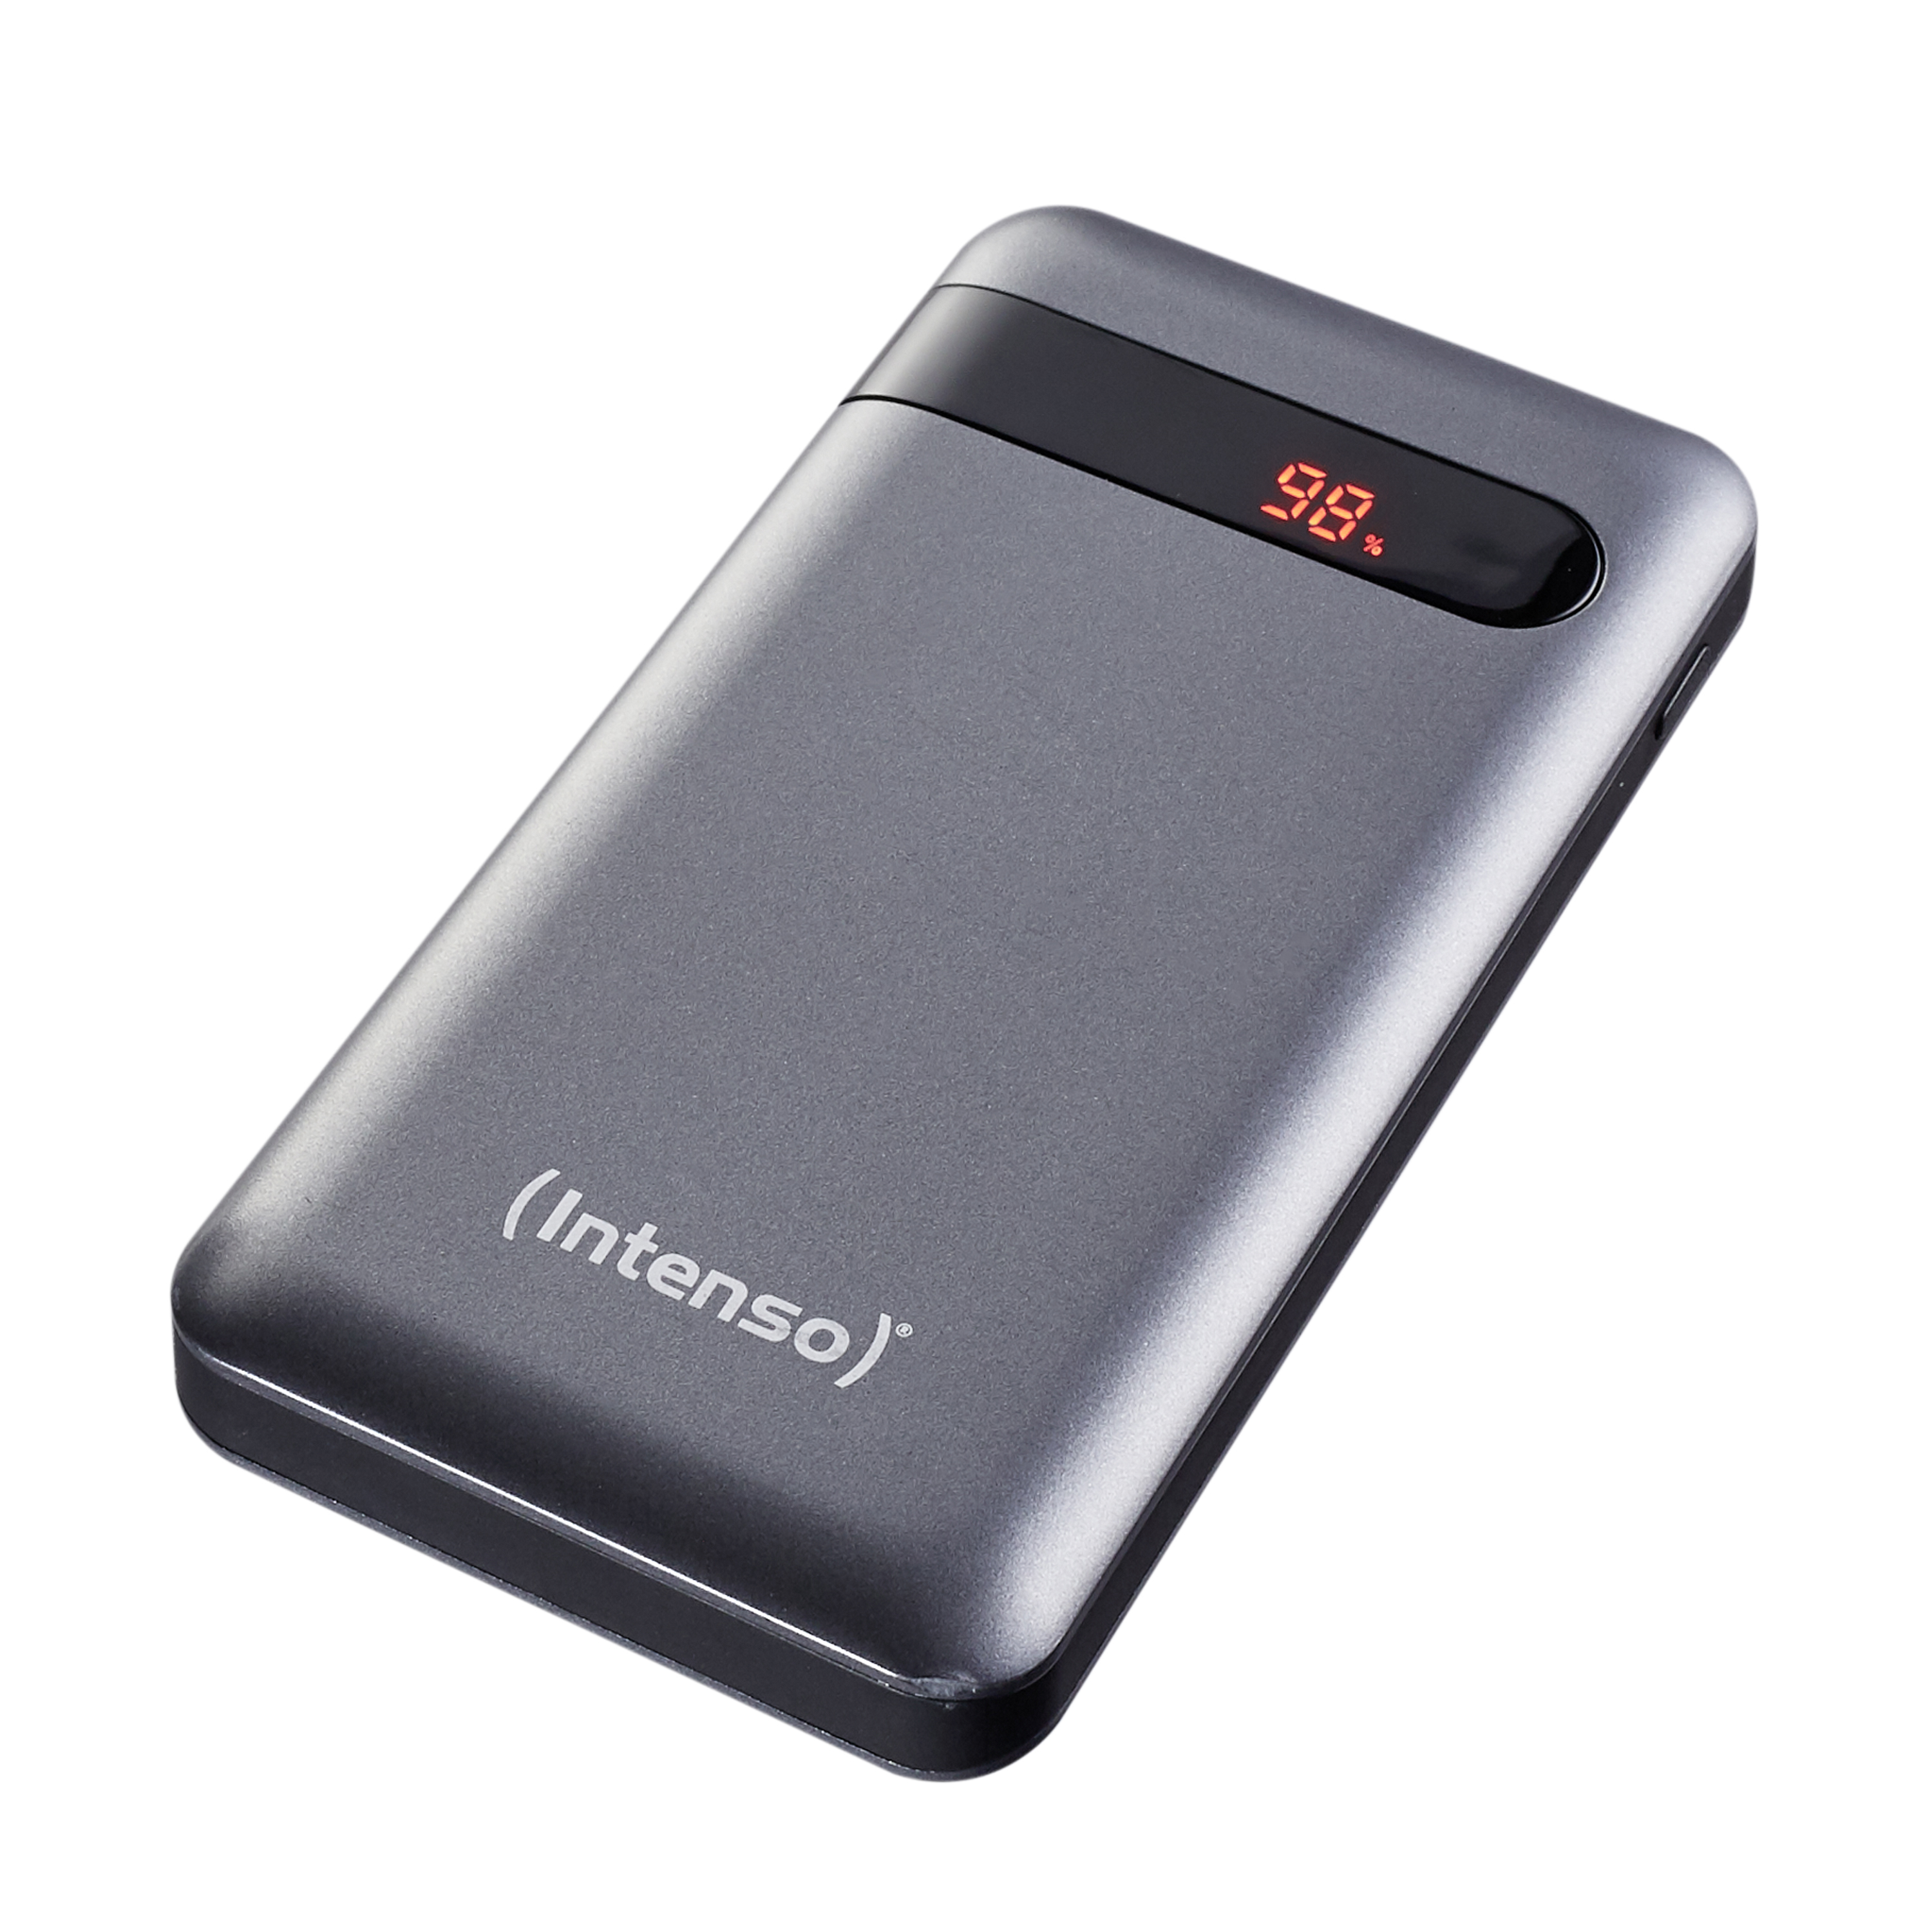 Intenso Powerbank PD10000 - Powerbank - 10000 mAh - 3 A - QC 3.0 (USB-C)